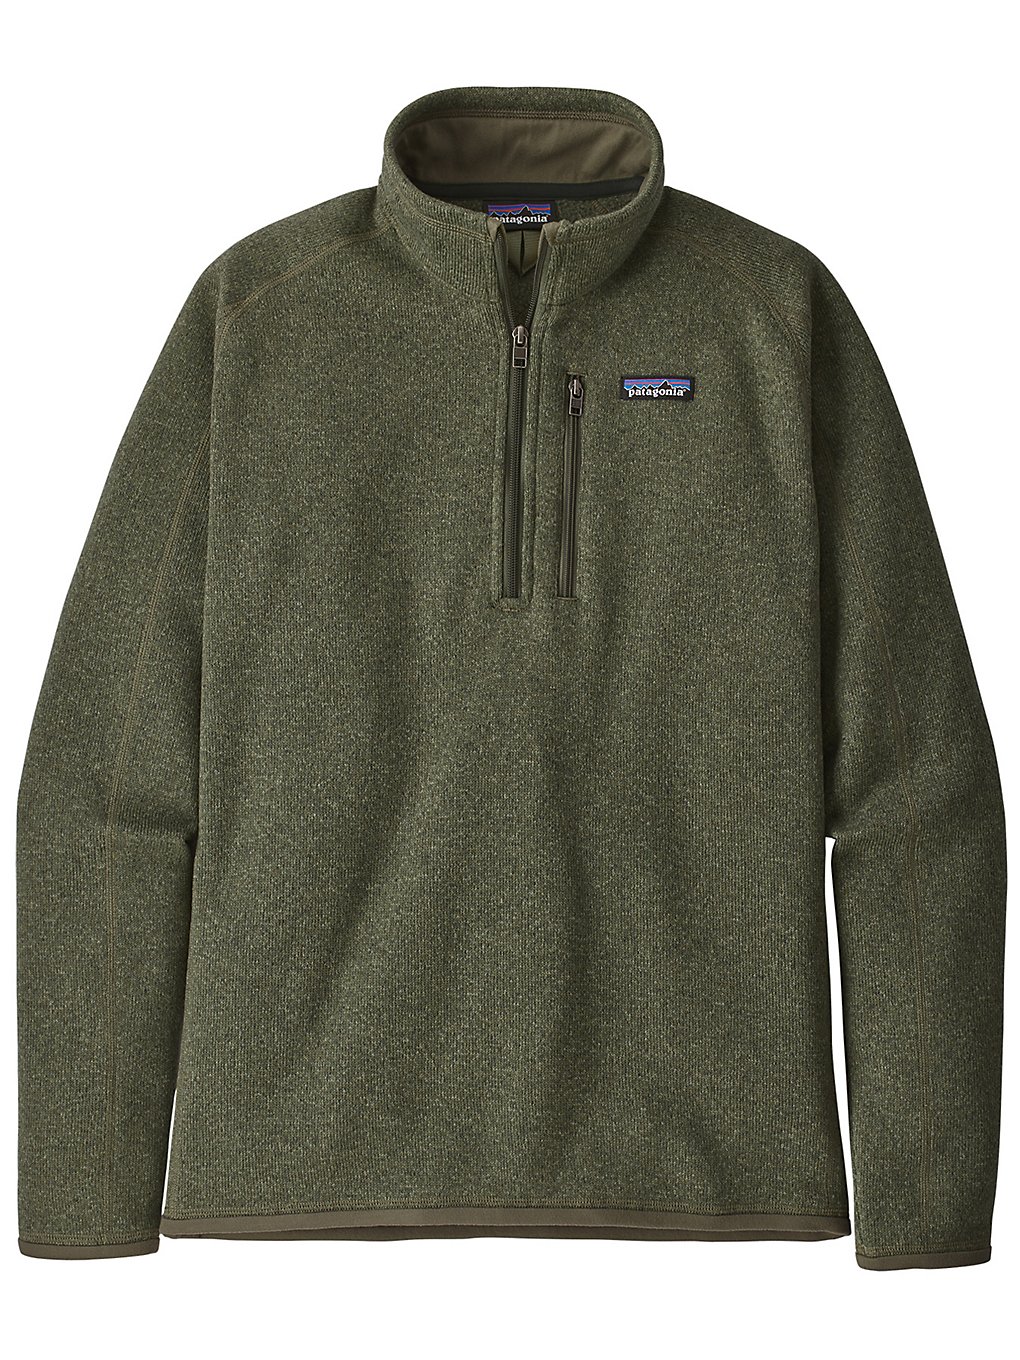 Patagonia Better 1/4 Zip Sweater industrial green kaufen